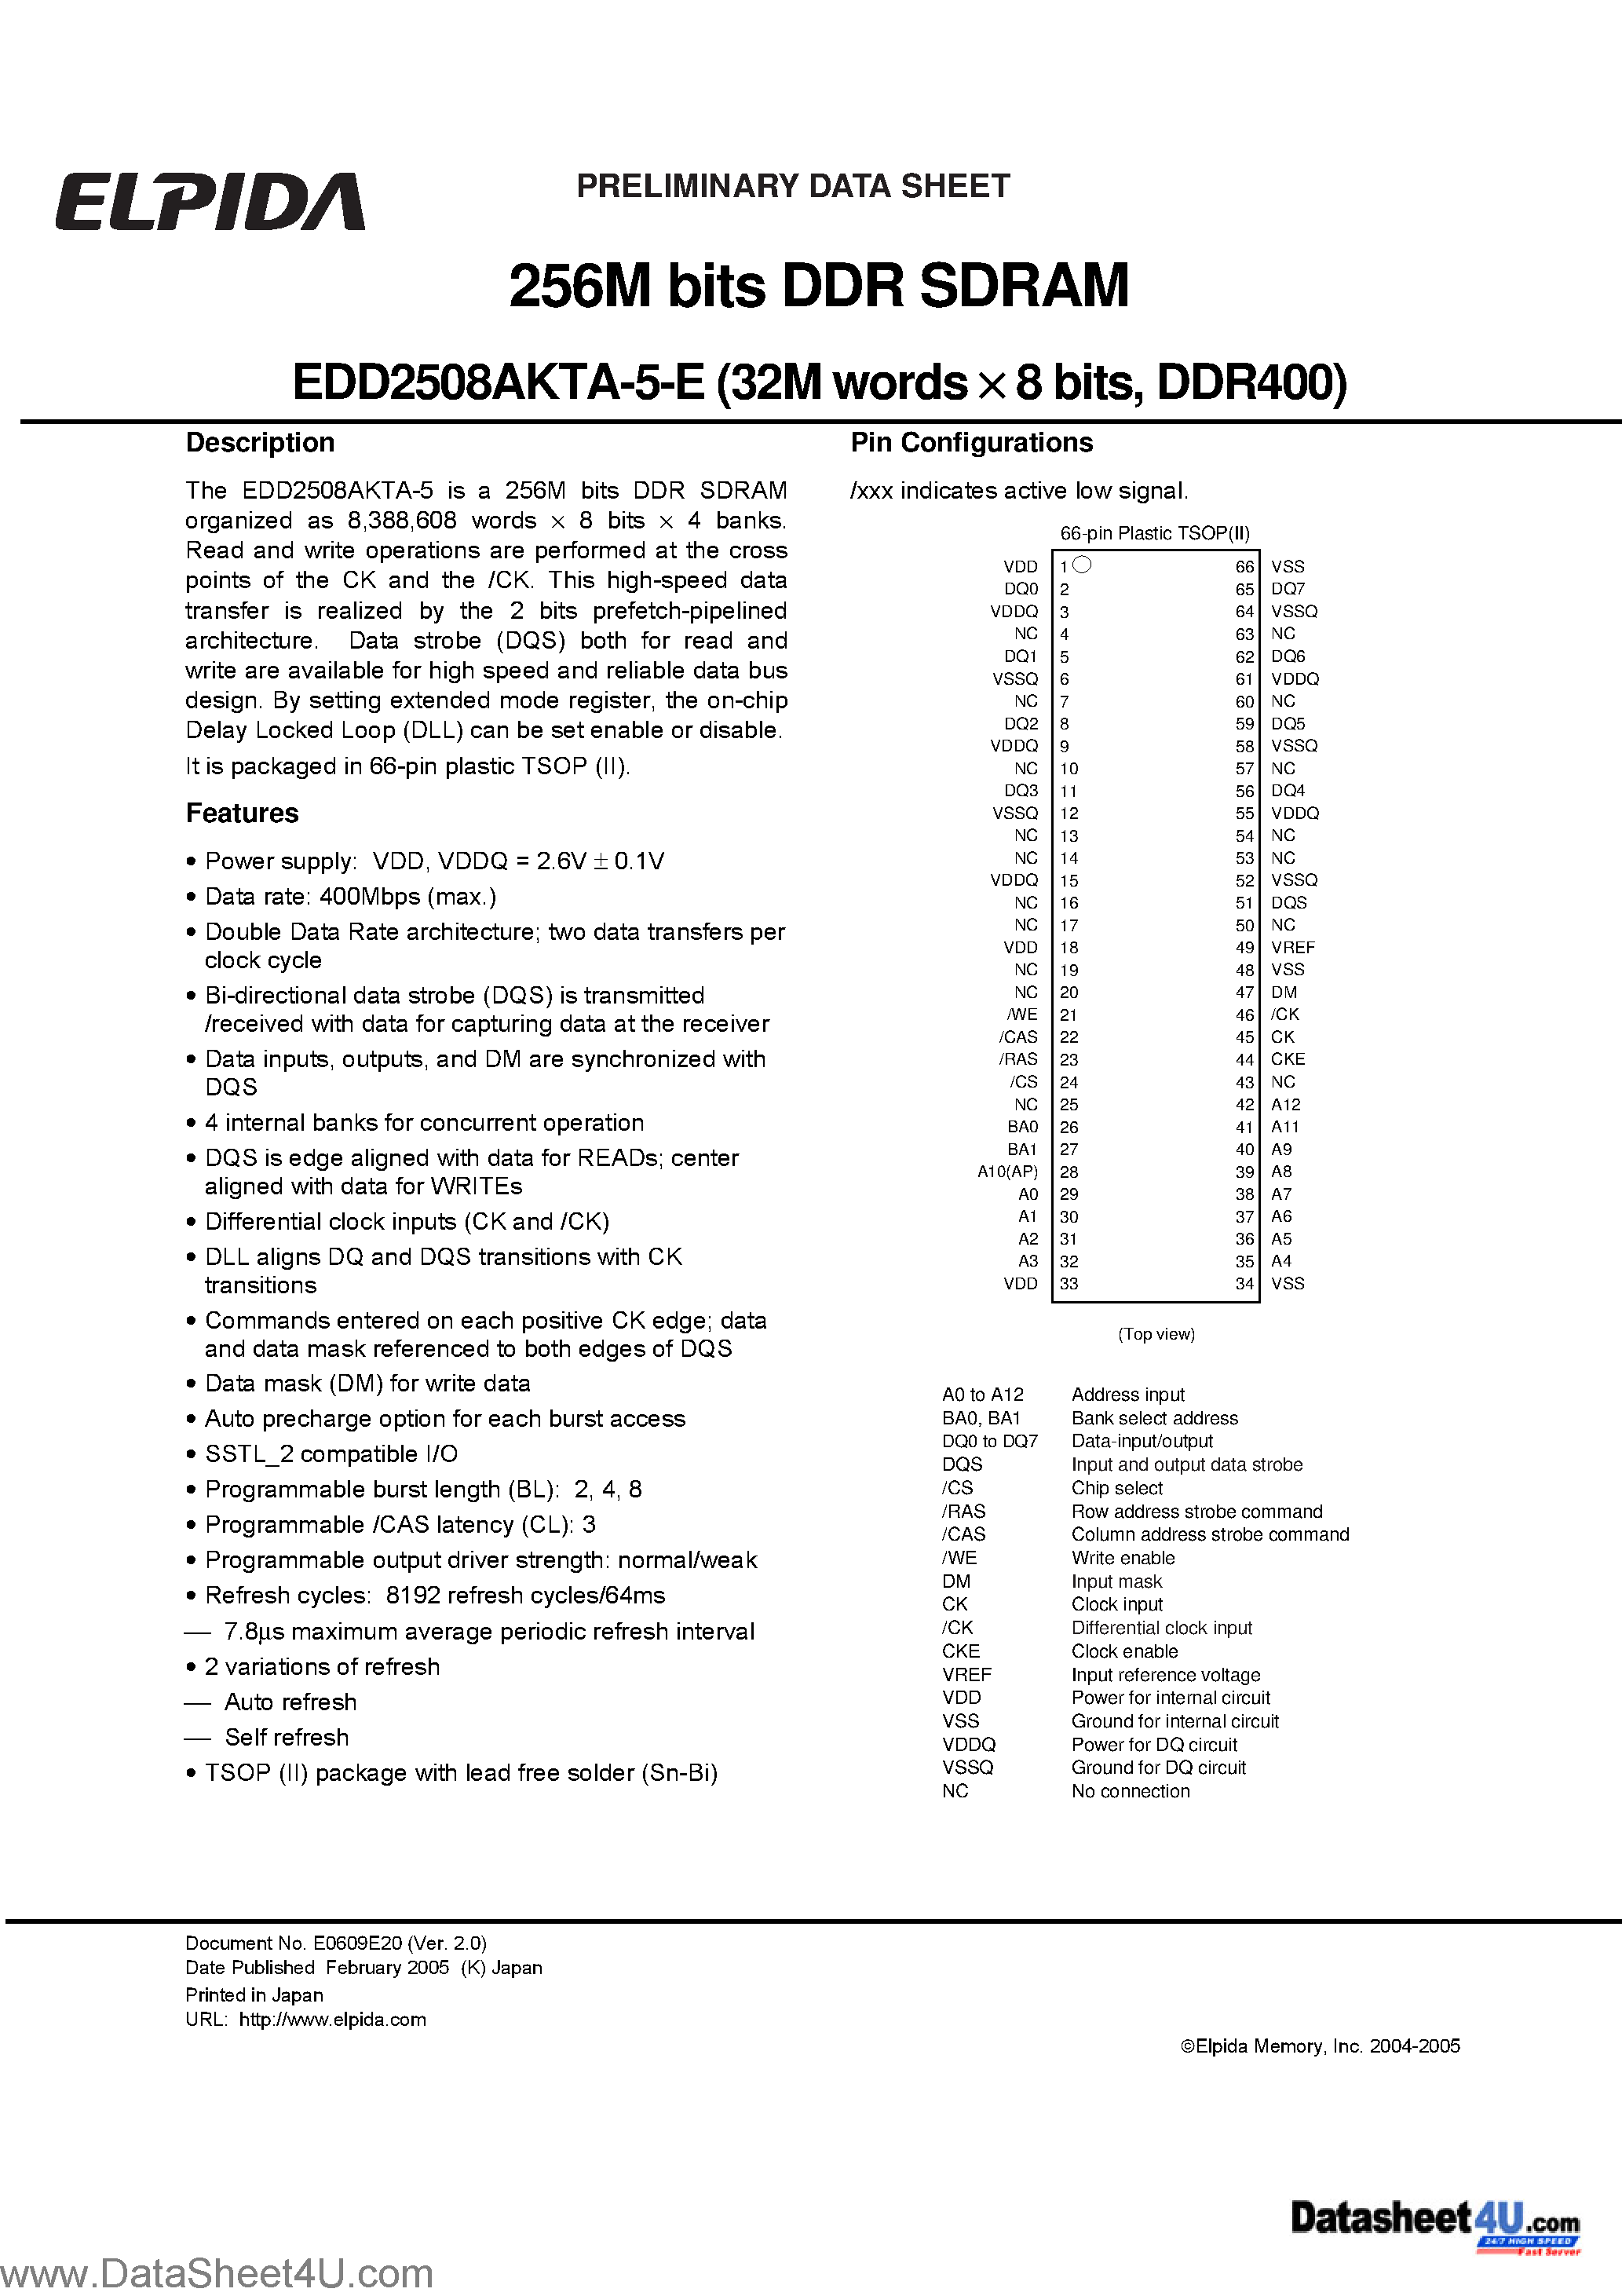 Datasheet EDD2508AKTA-5-E - 256M bits DDR SDRAM (32M words x 8 bits DDR400) page 1